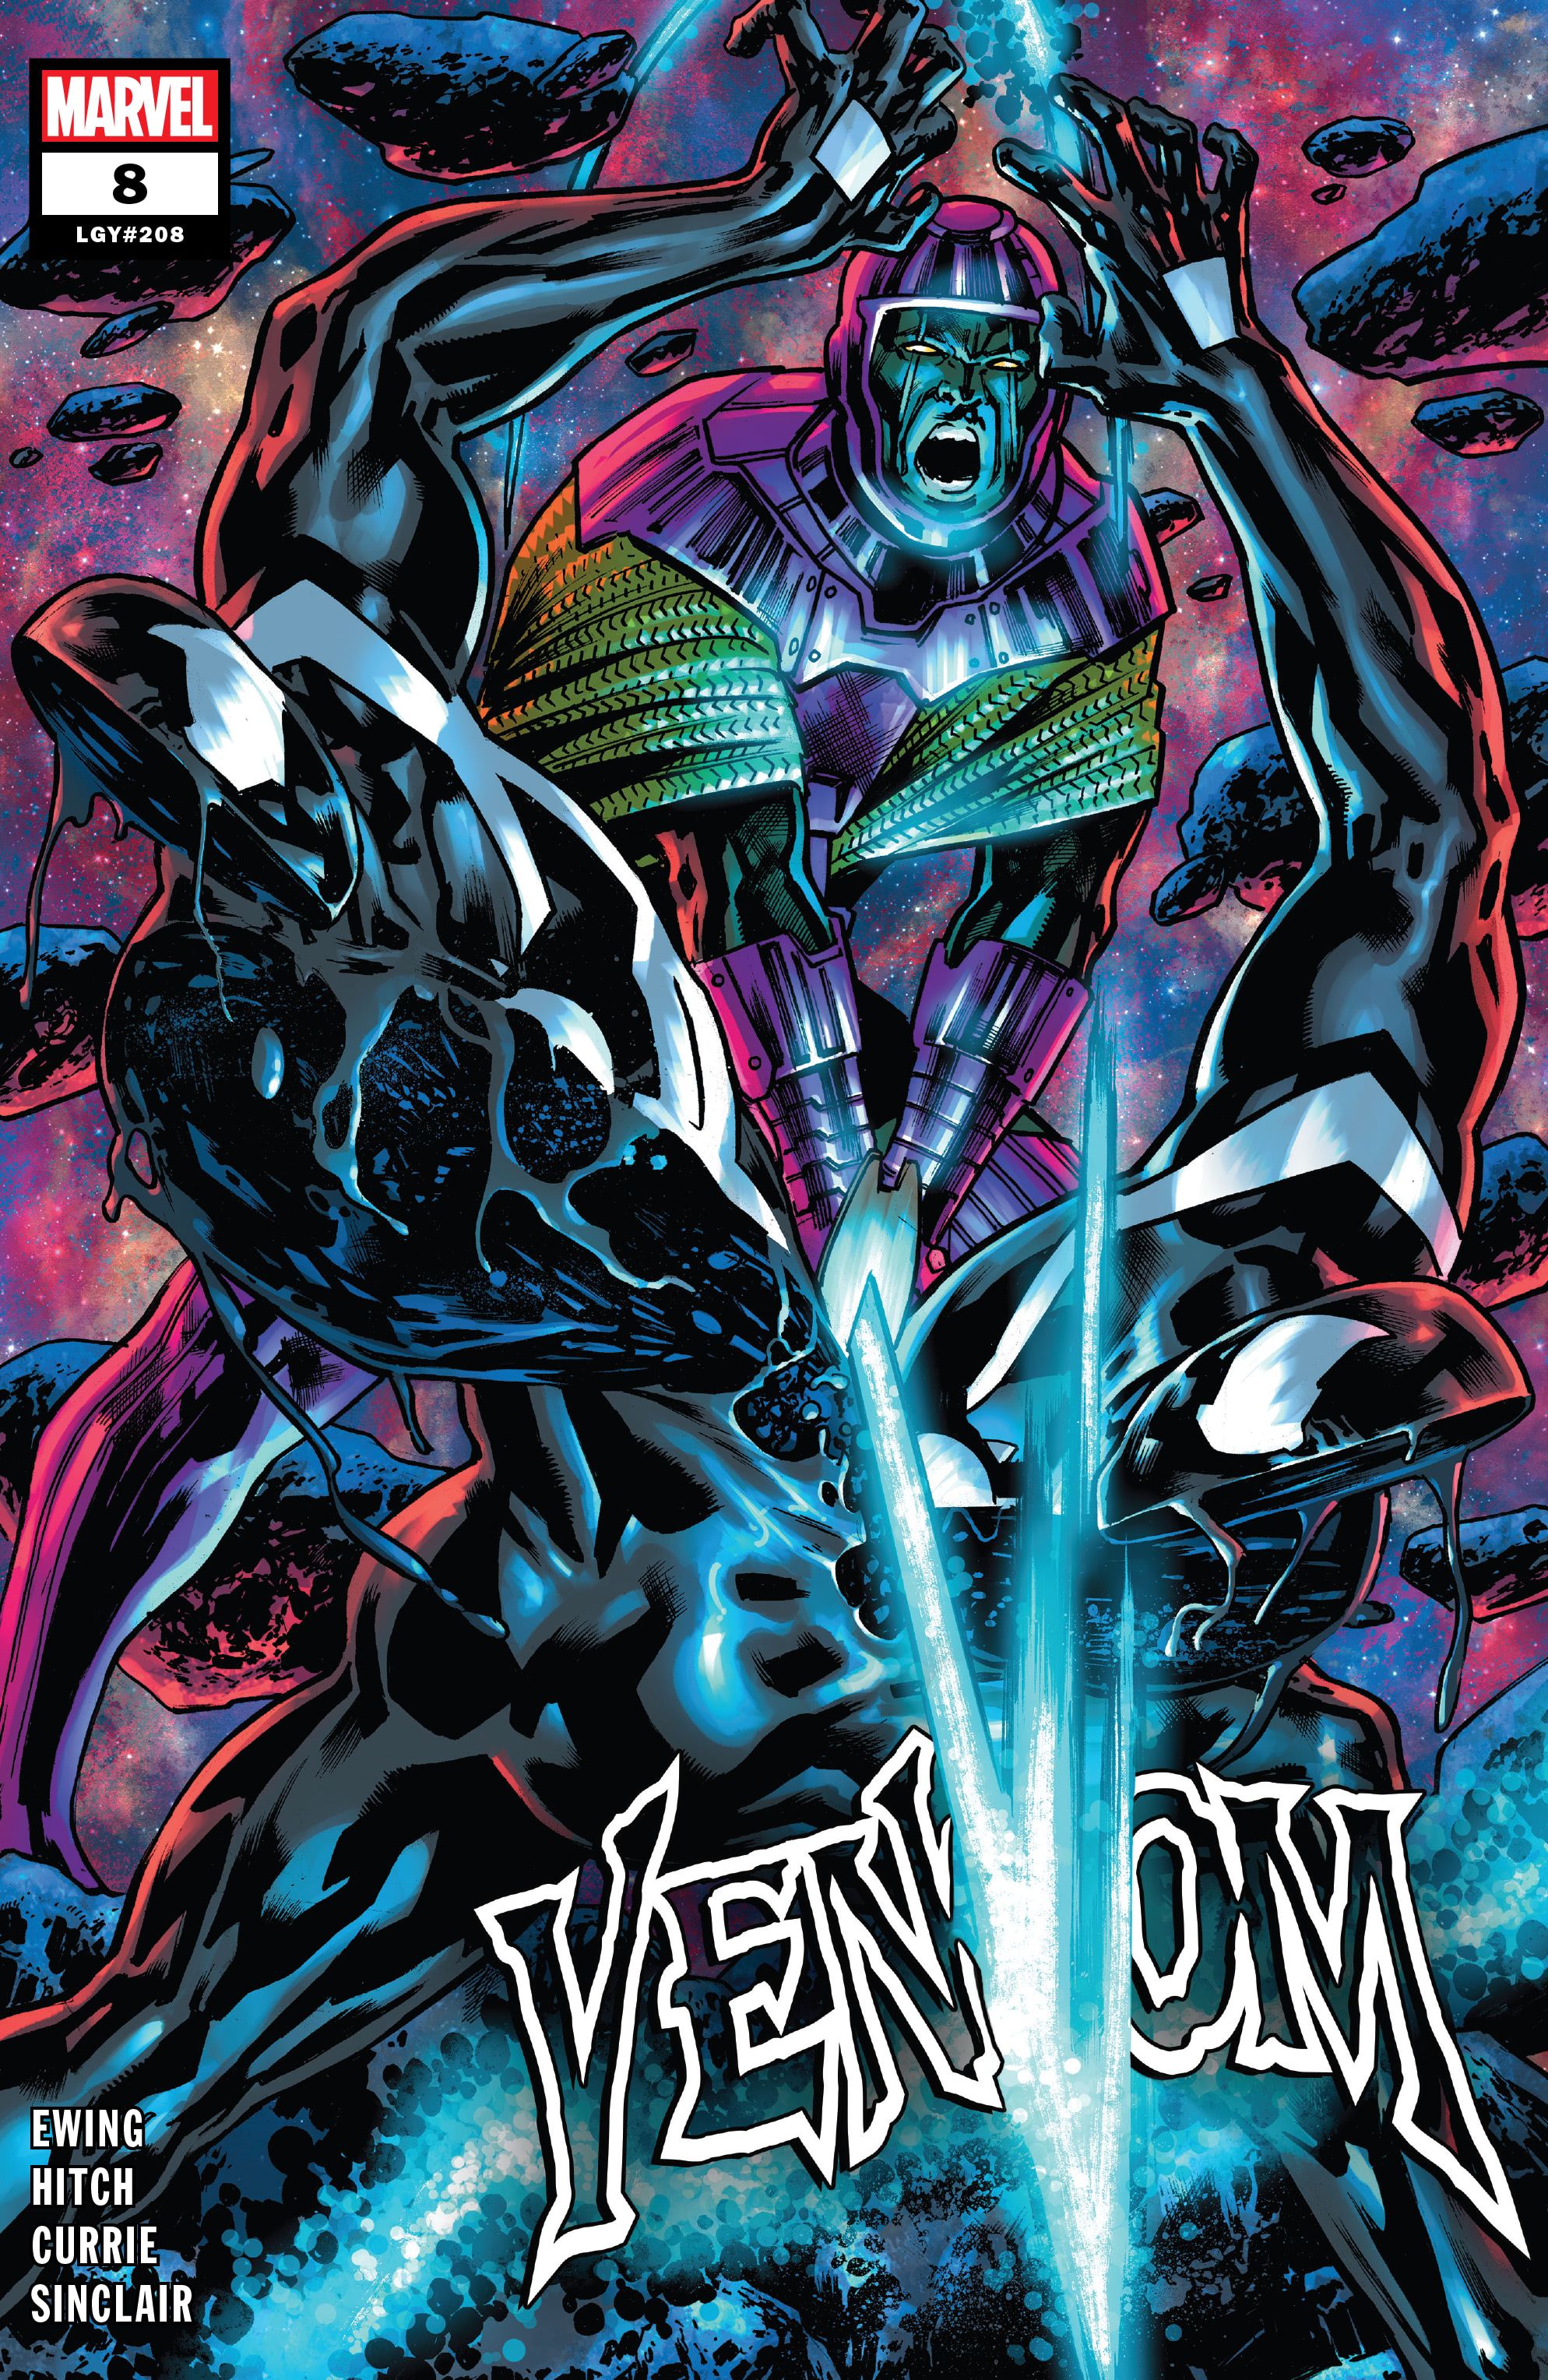 Cover of Venom #8 